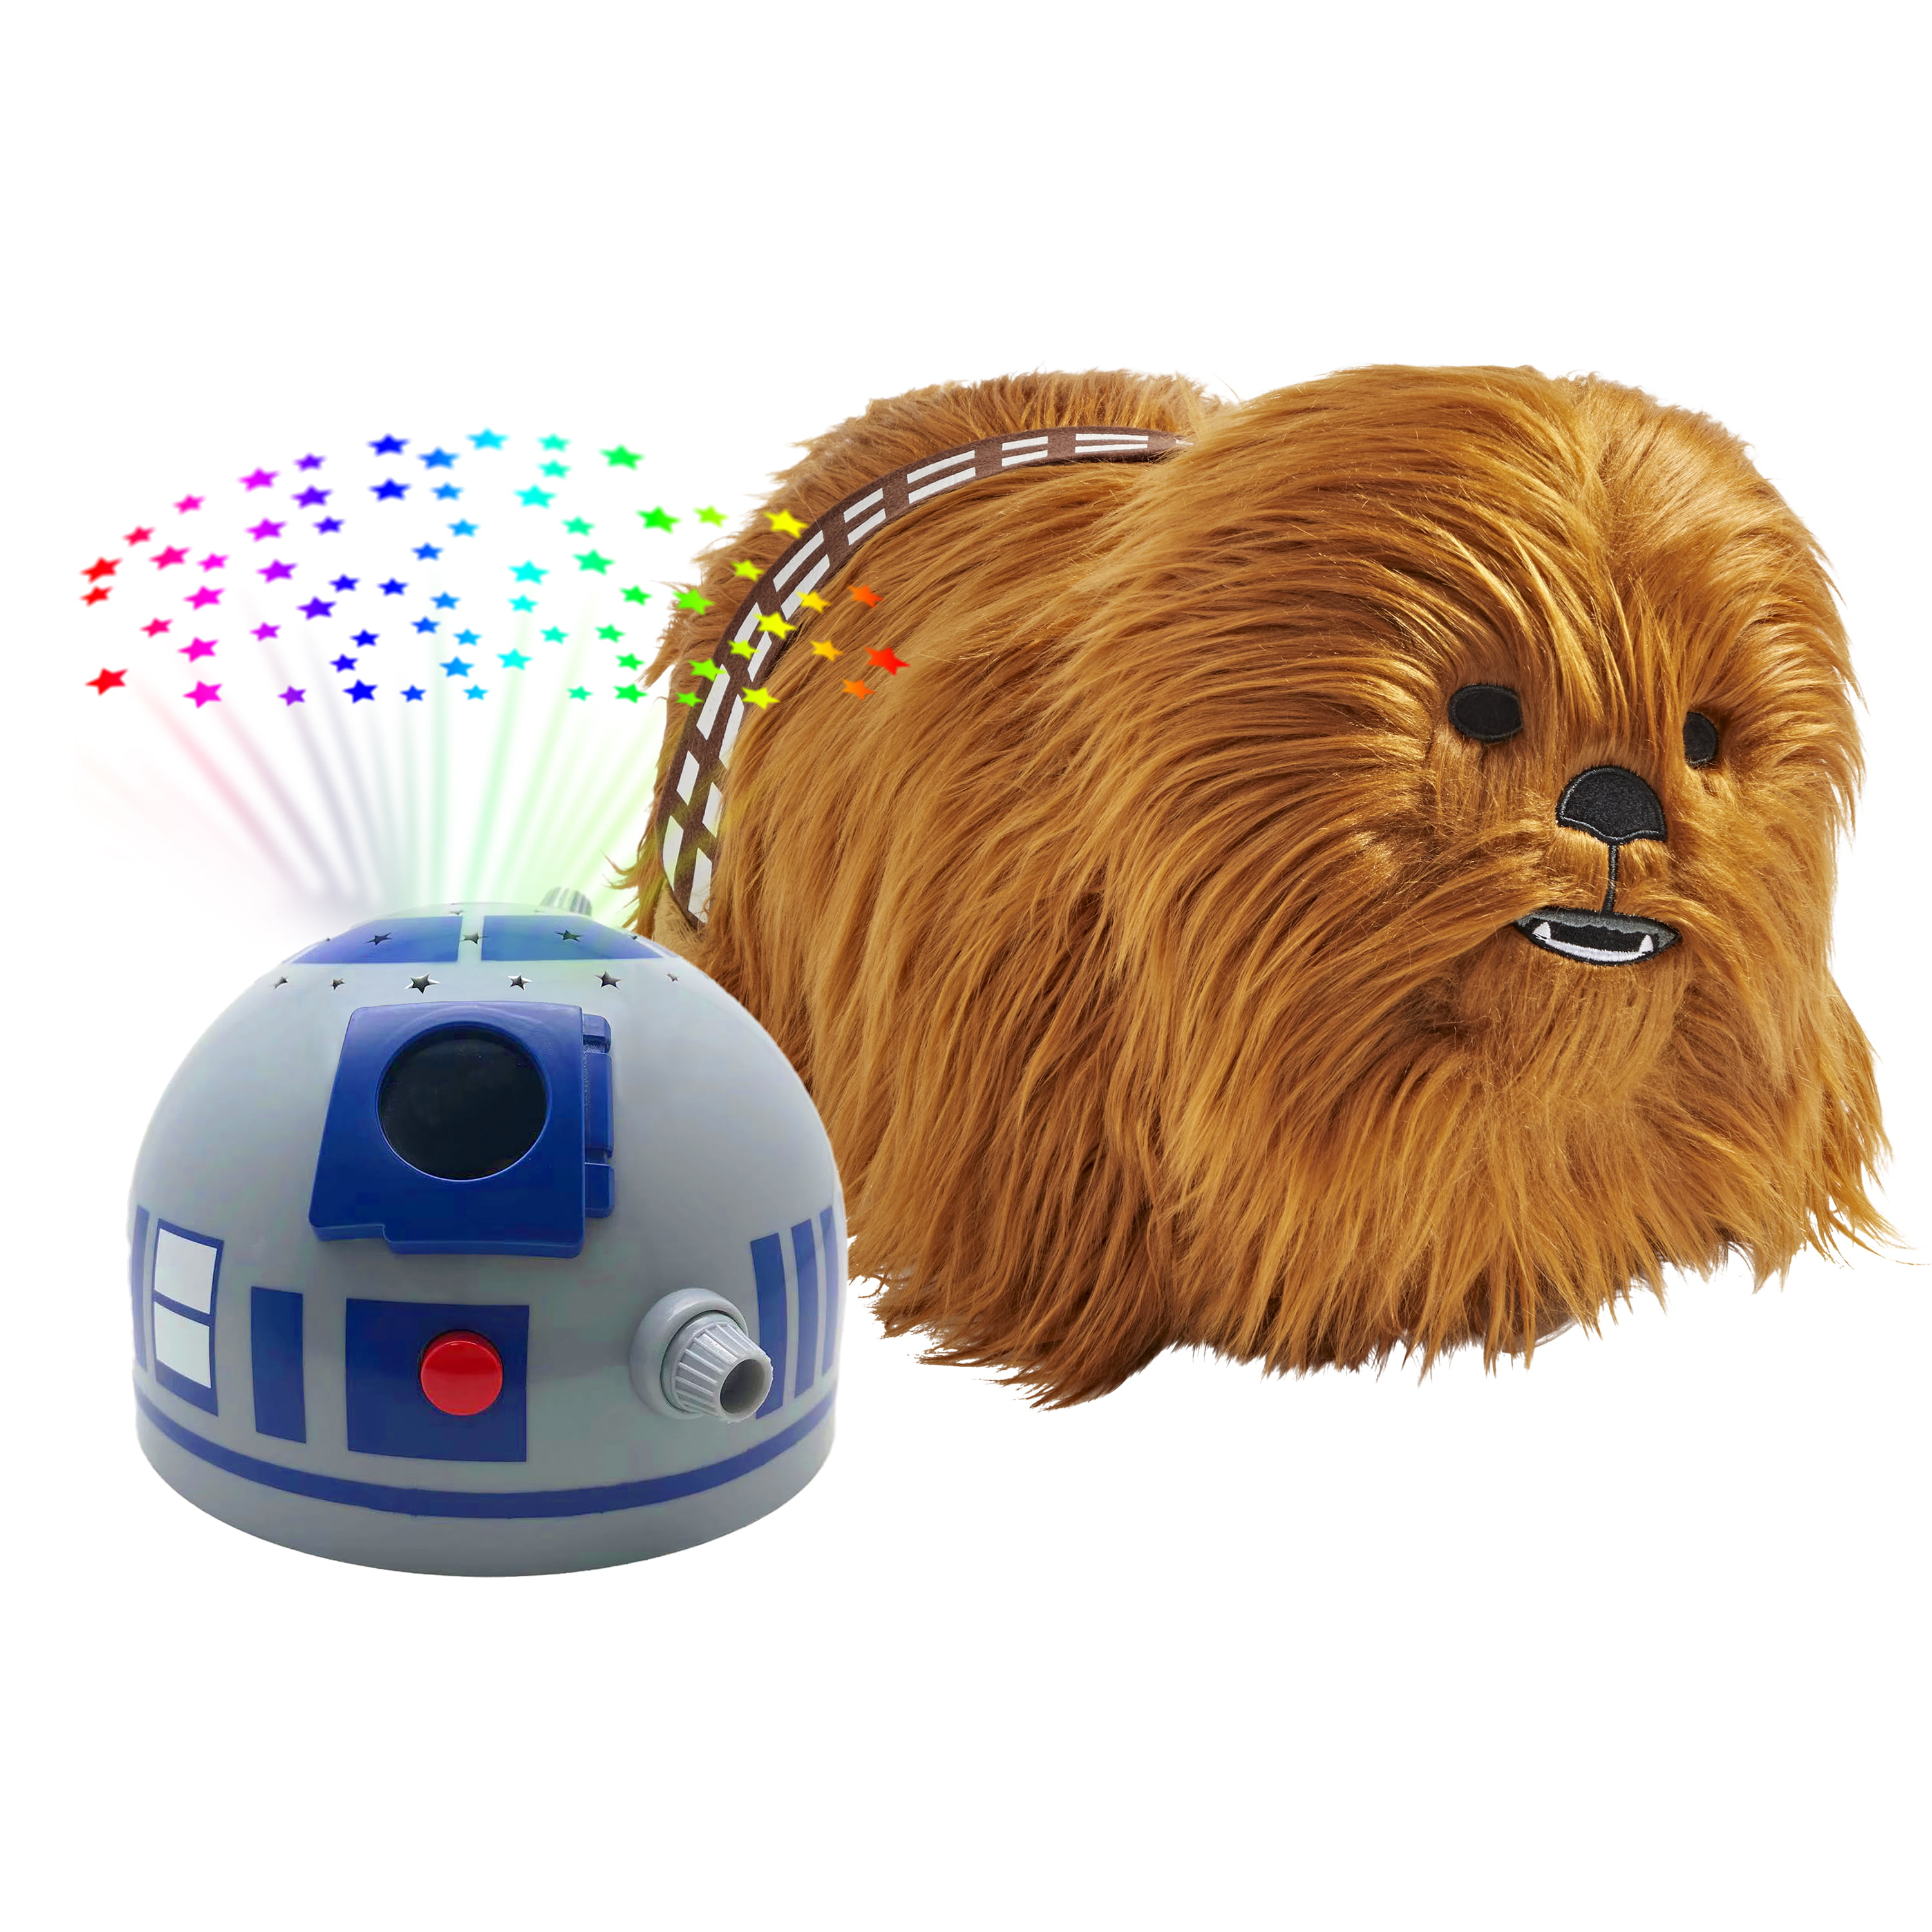 New Disney Star Wars The Force Awakens 10 Inch Chewbacca Soft Plush Toy 